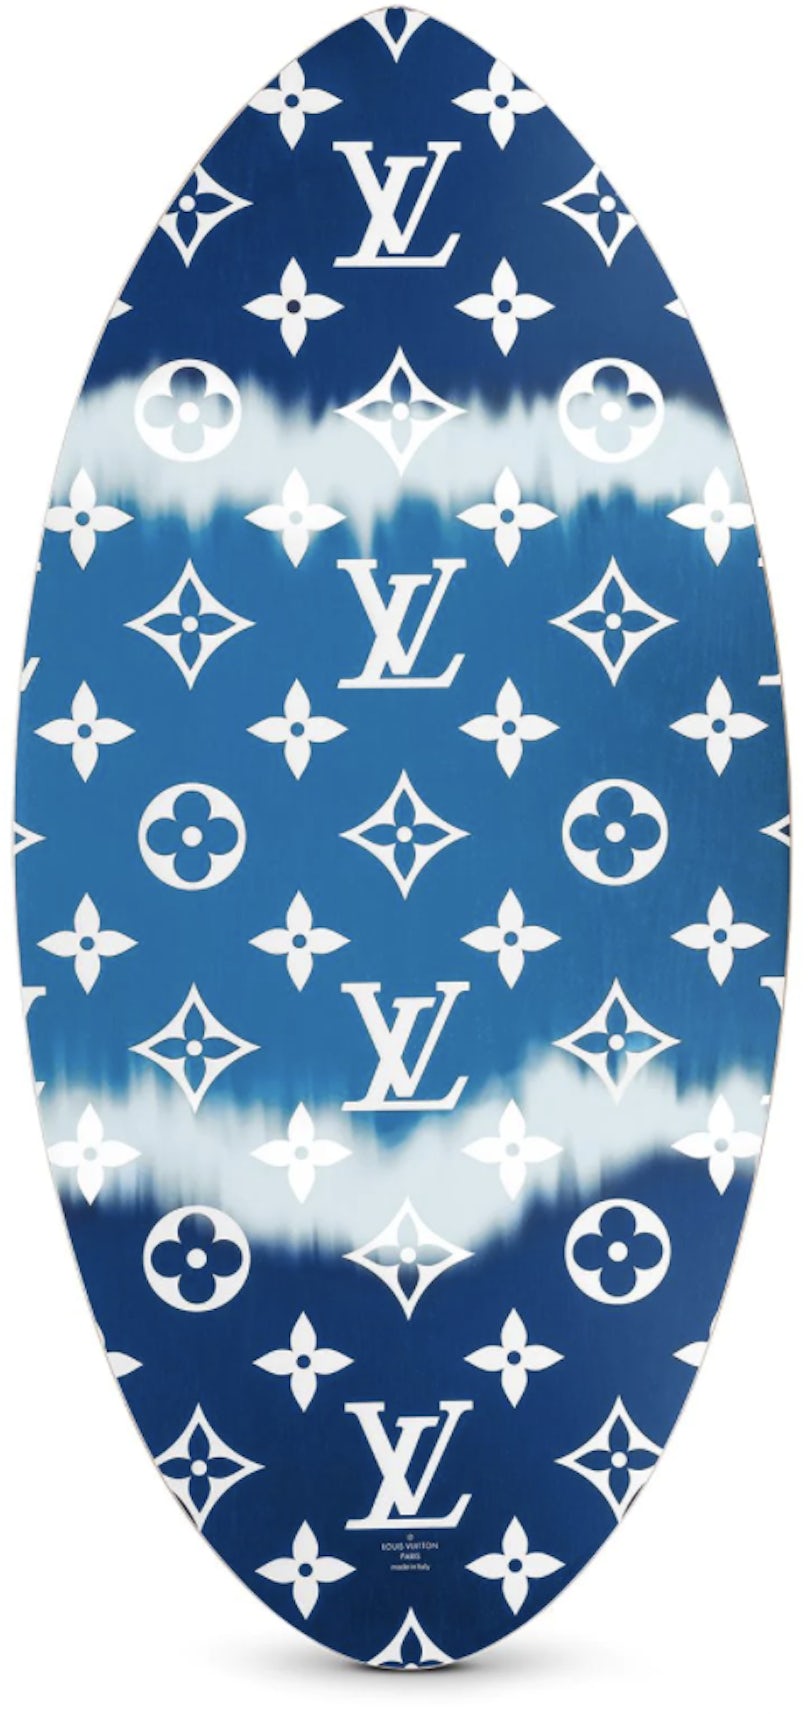 Products By Louis Vuitton: Voguez Volez Voyagez Paperweight